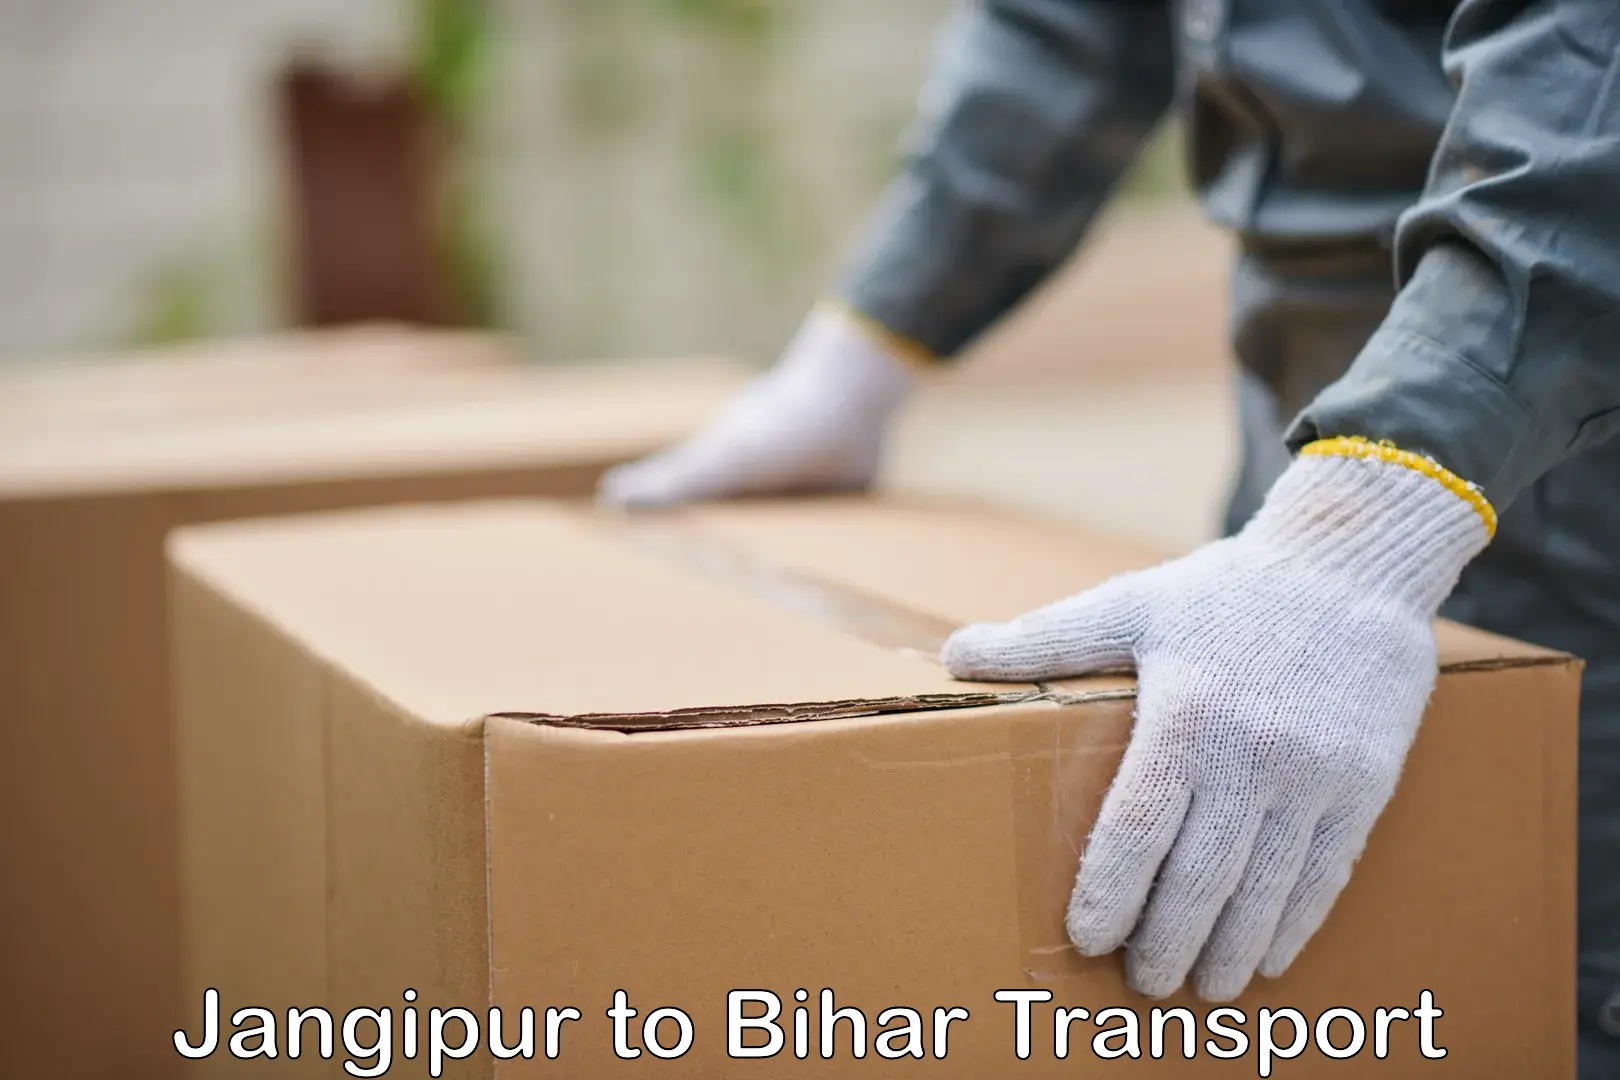 Shipping partner Jangipur to Bihar